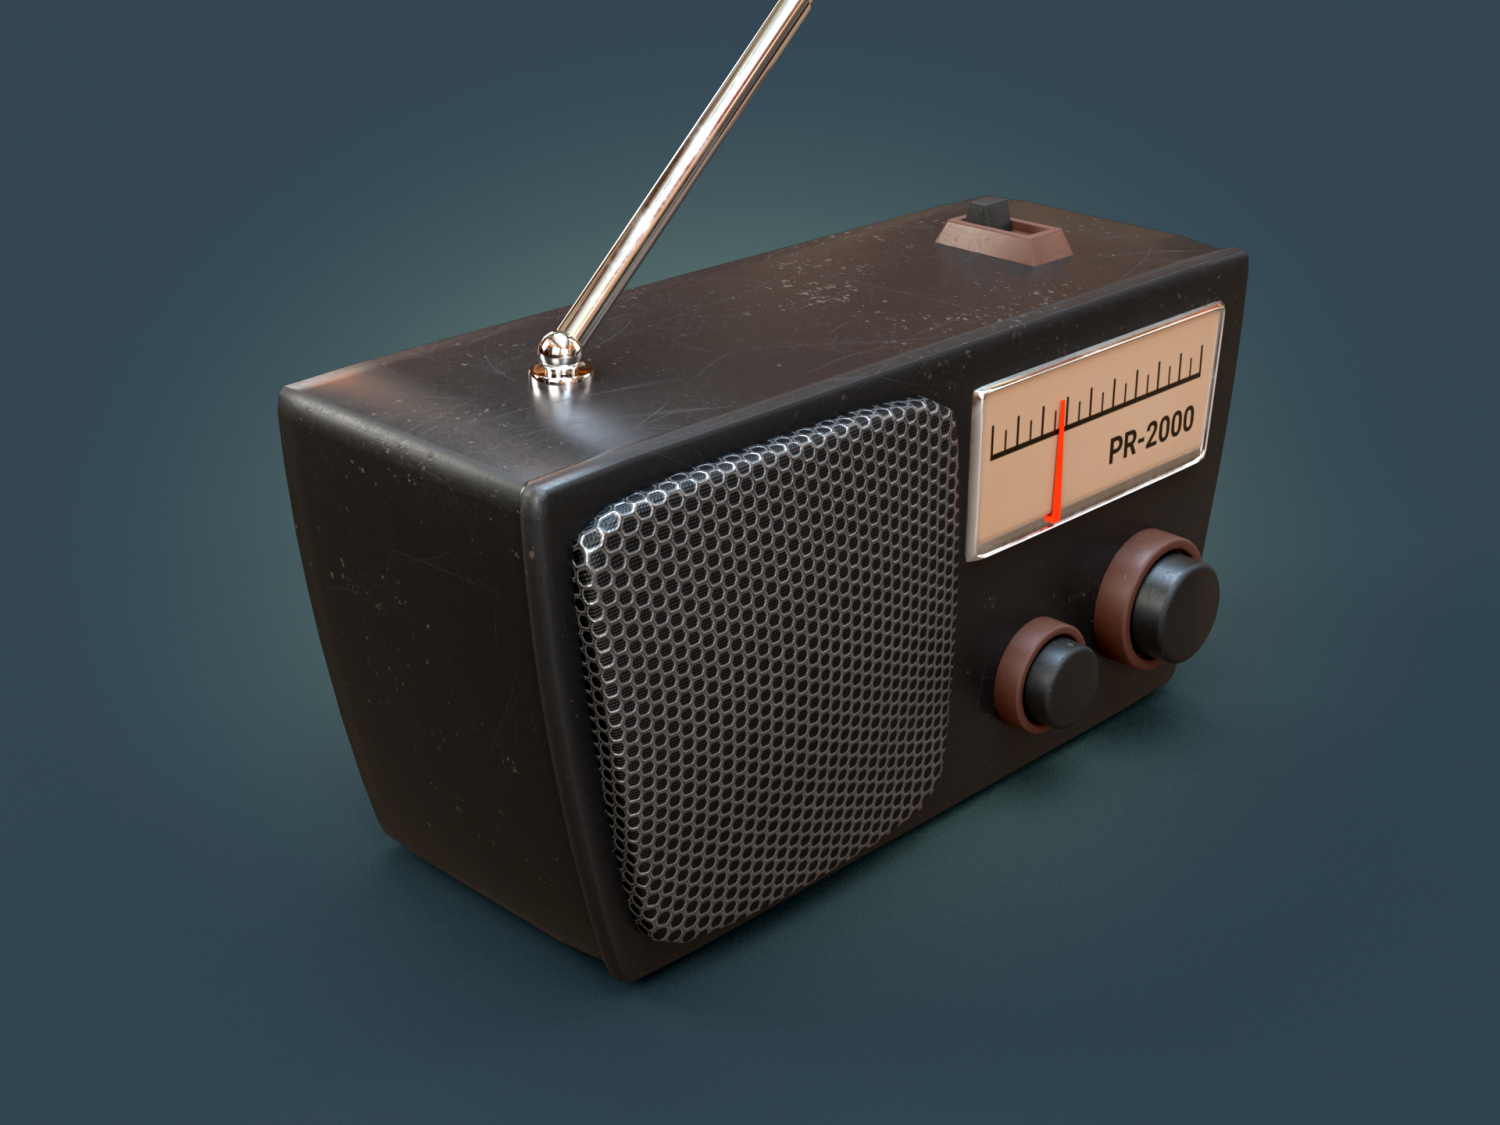 3д модель радио. Радио моделирование. 3d Radio. Sifi 3d Radio model. Radio model